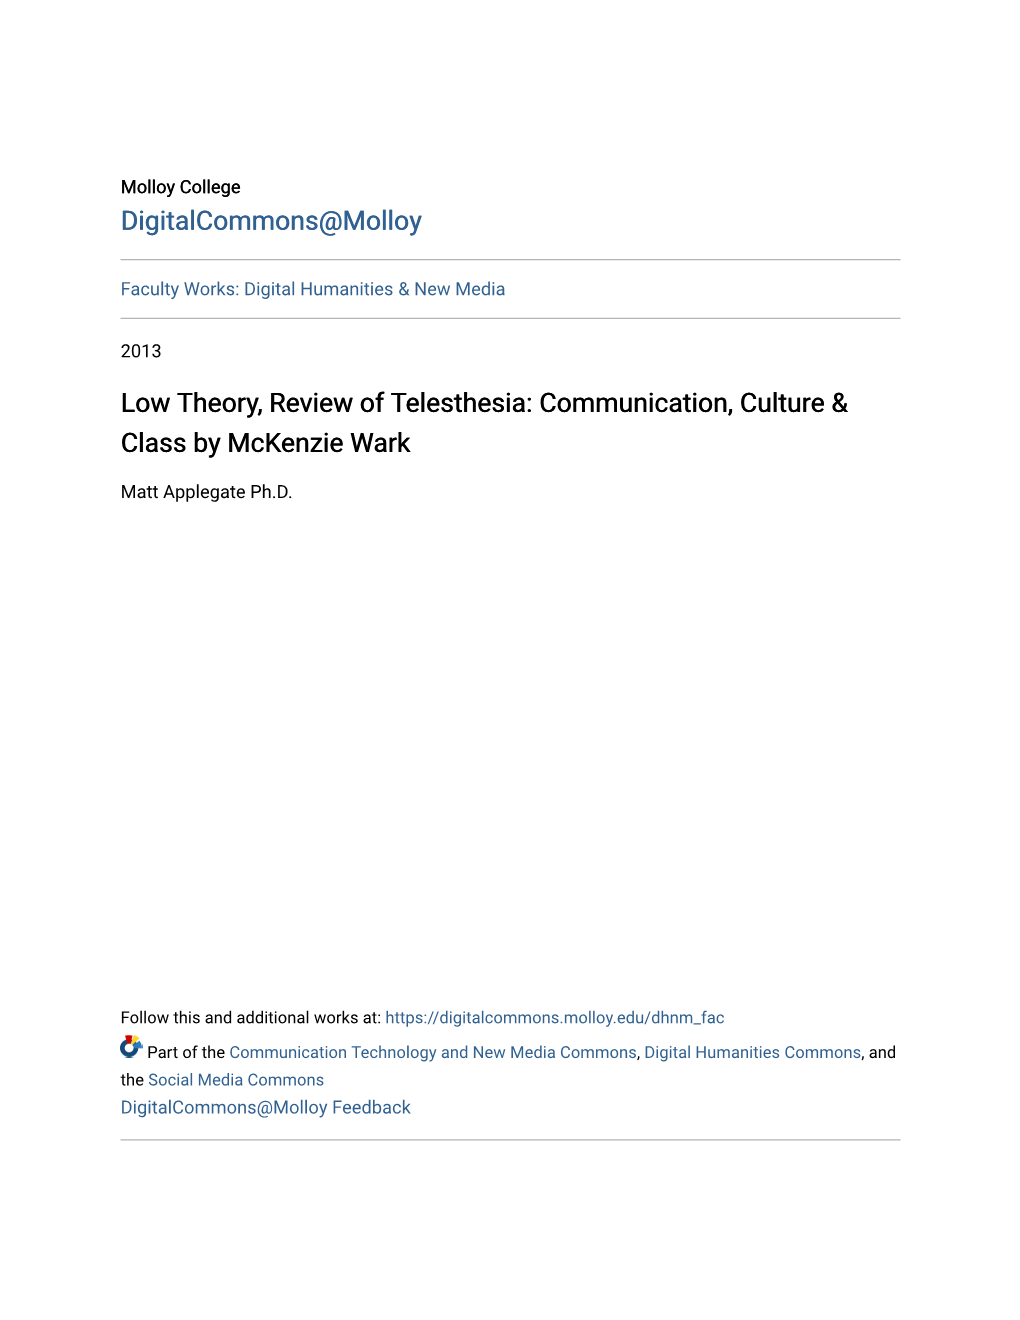 Communication, Culture & Class by Mckenzie Wark